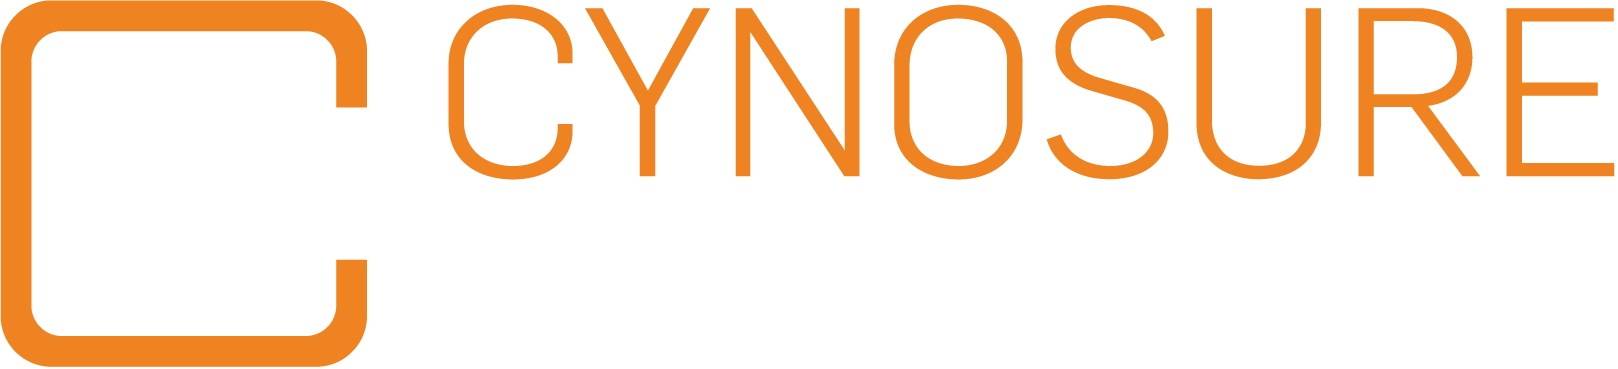 cynosure-university-final-side-white